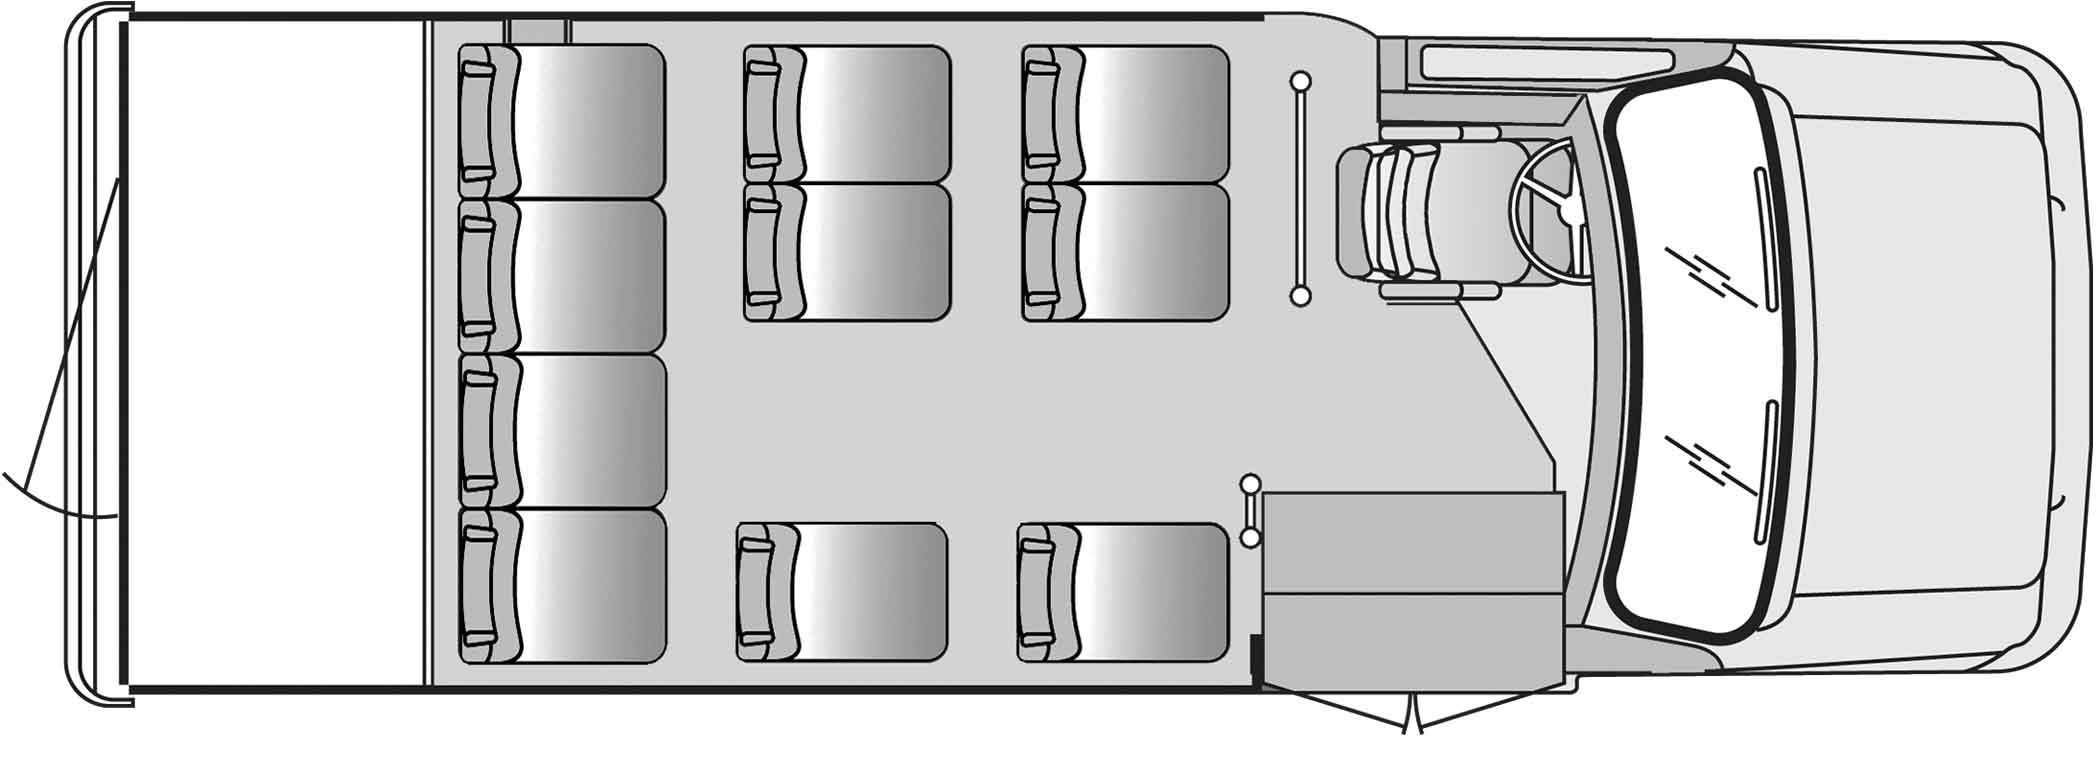 10 Passenger With Rear Luggage Plus Driver Floorplan Image